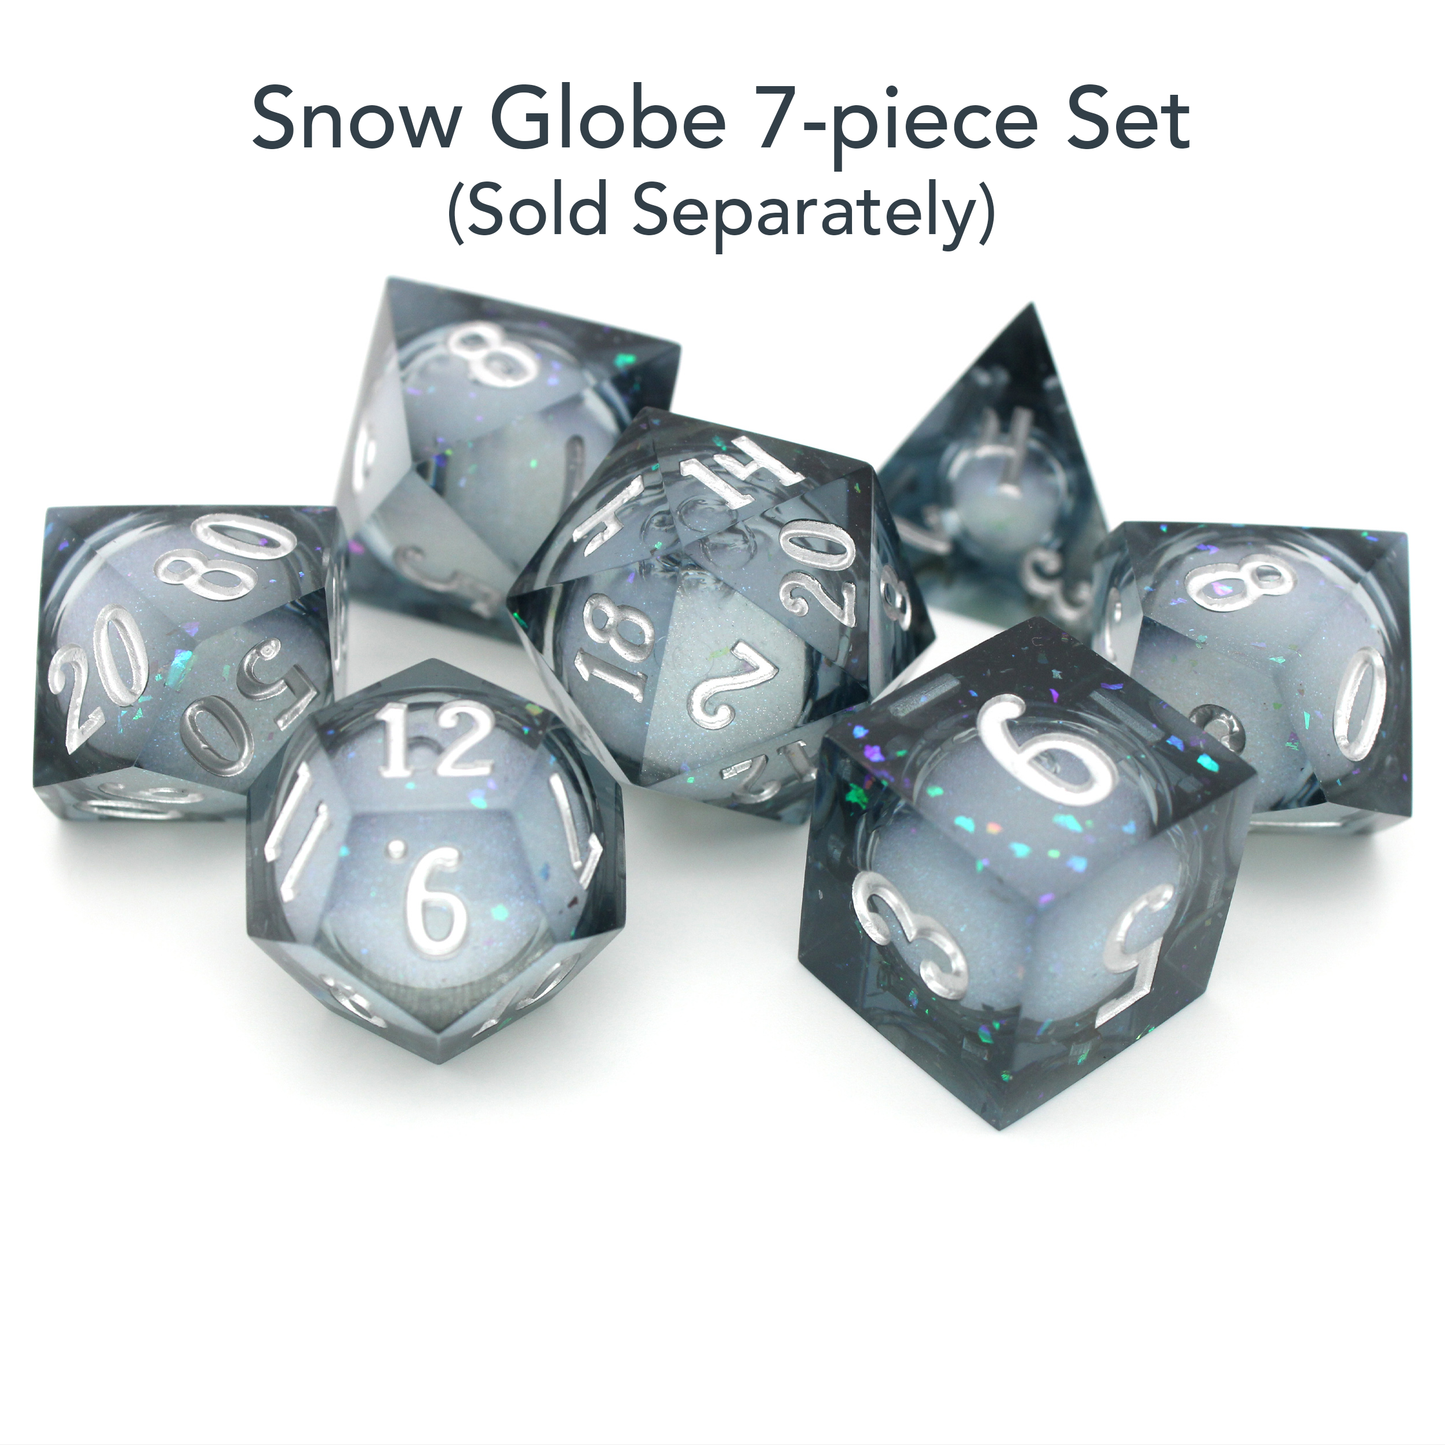 Snow Globe - Chonky